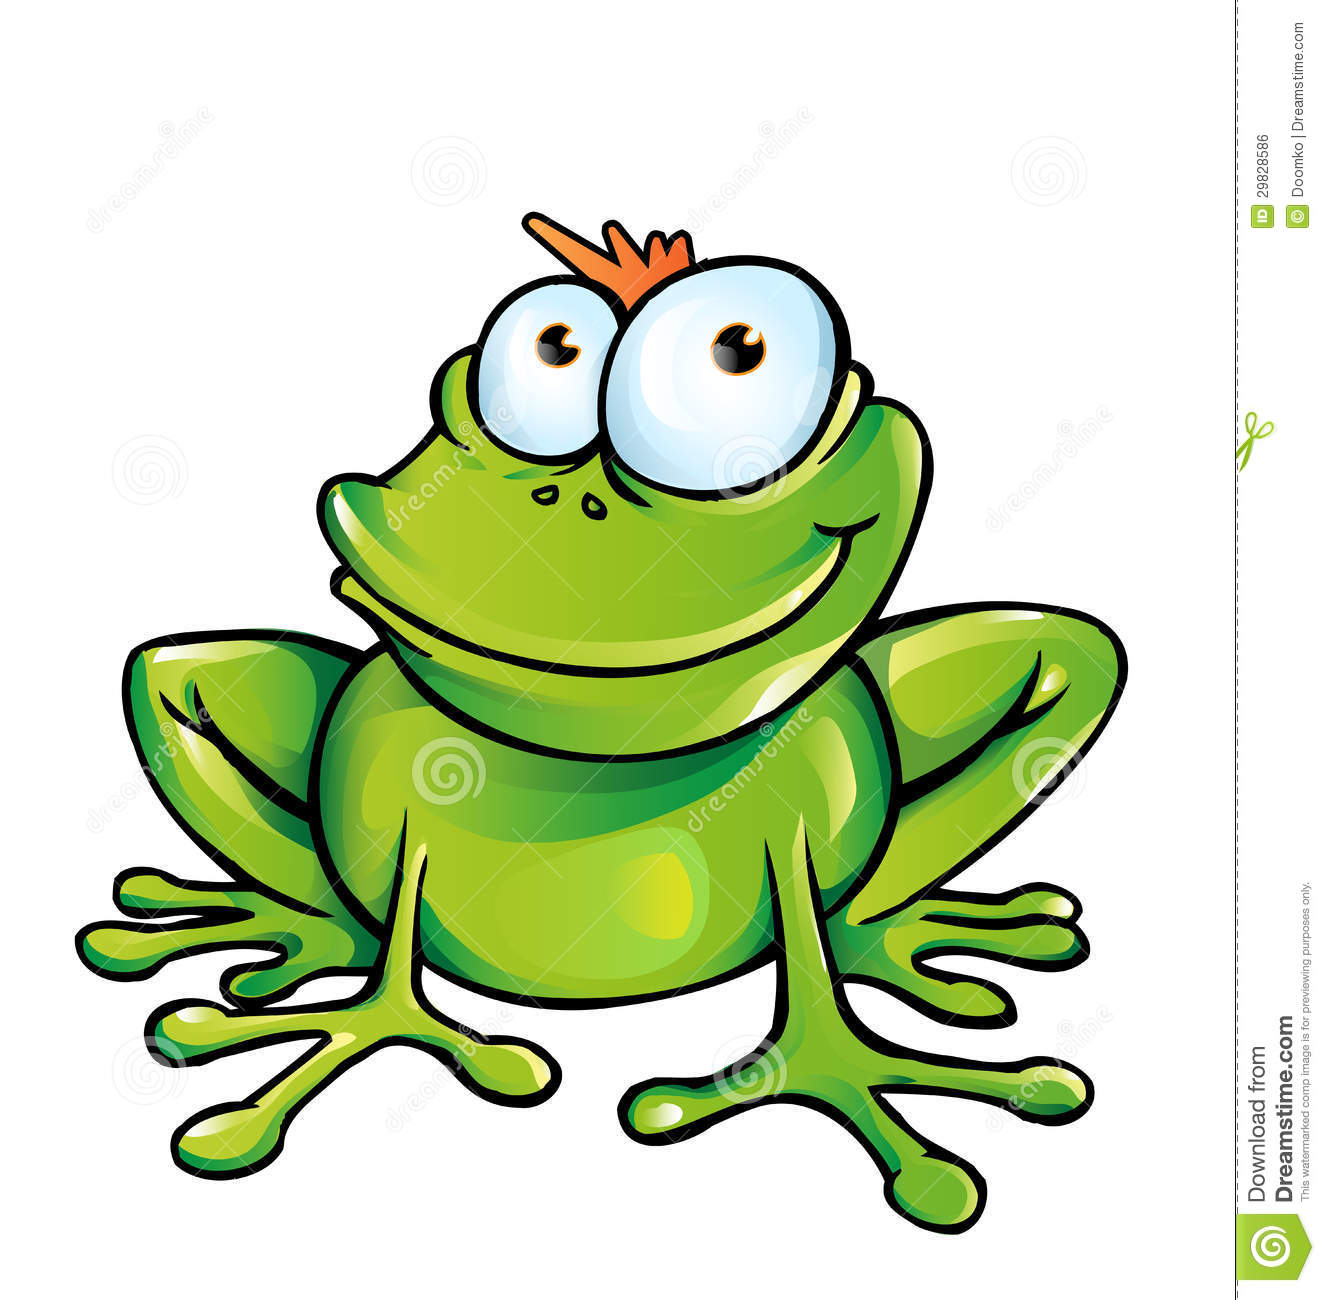 Pin Cartoon Frog Clip Art On Pinterest